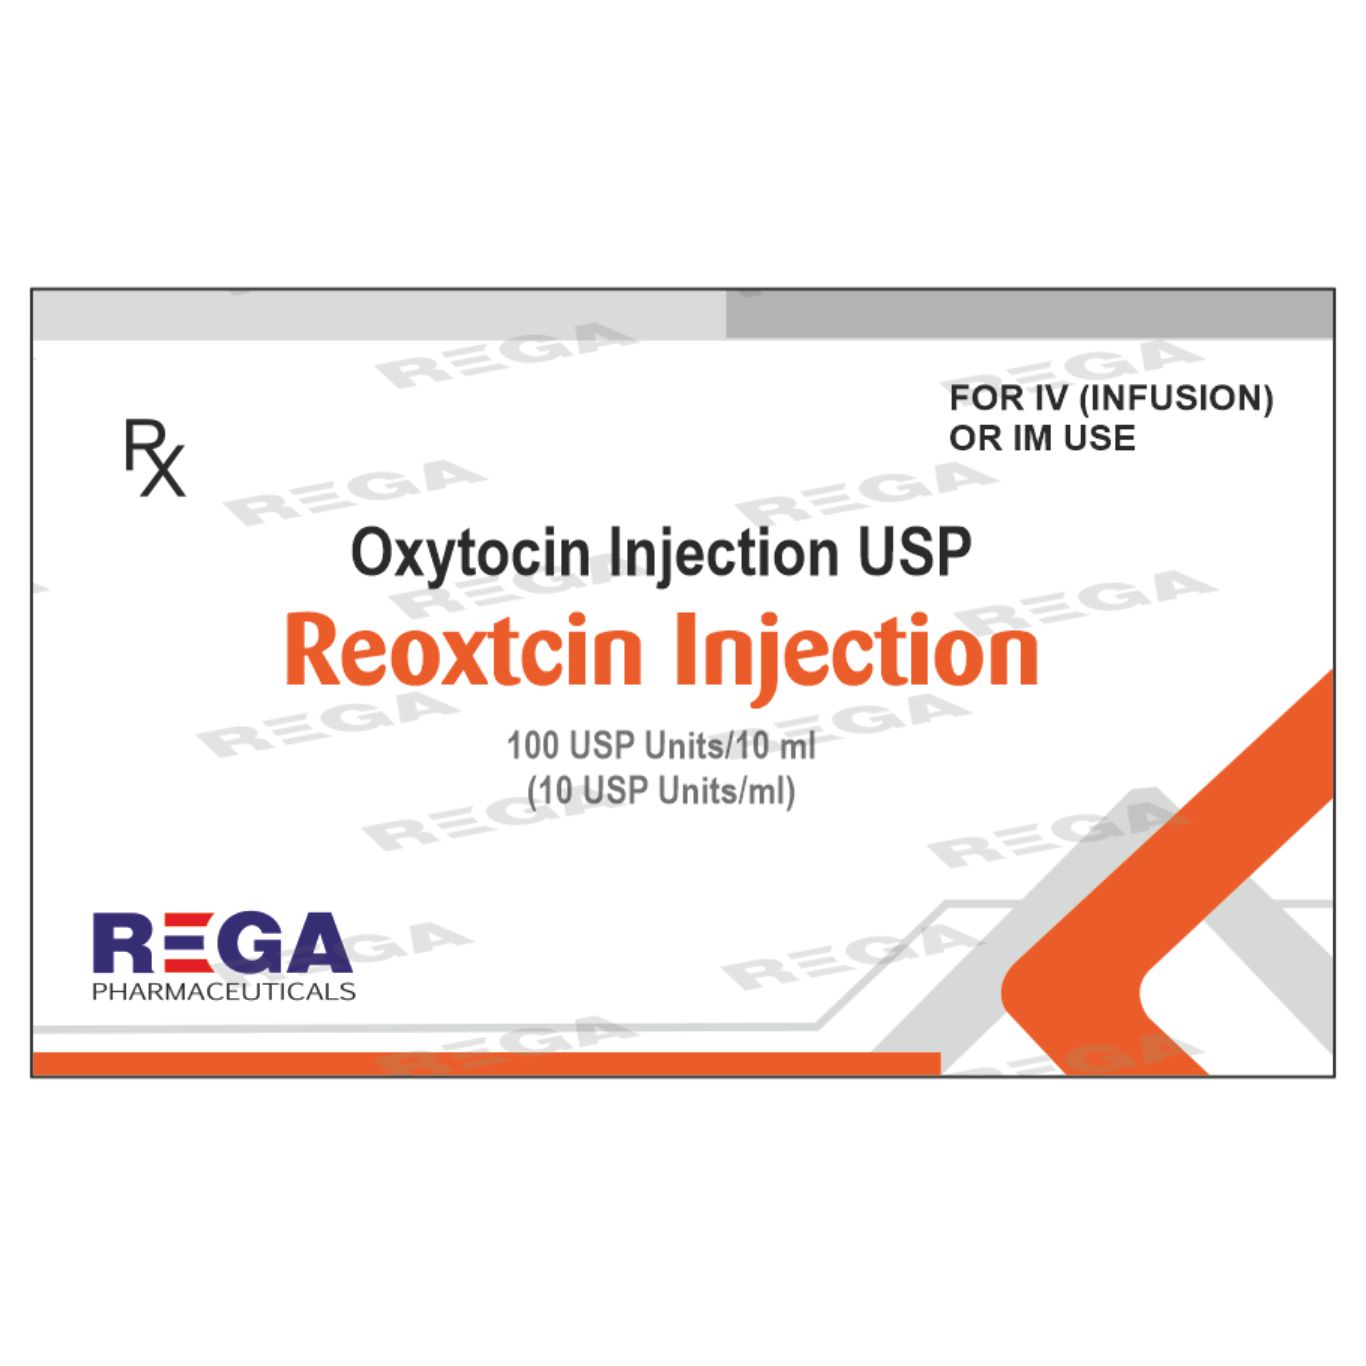 Oxytocin Injection 10 units/ml